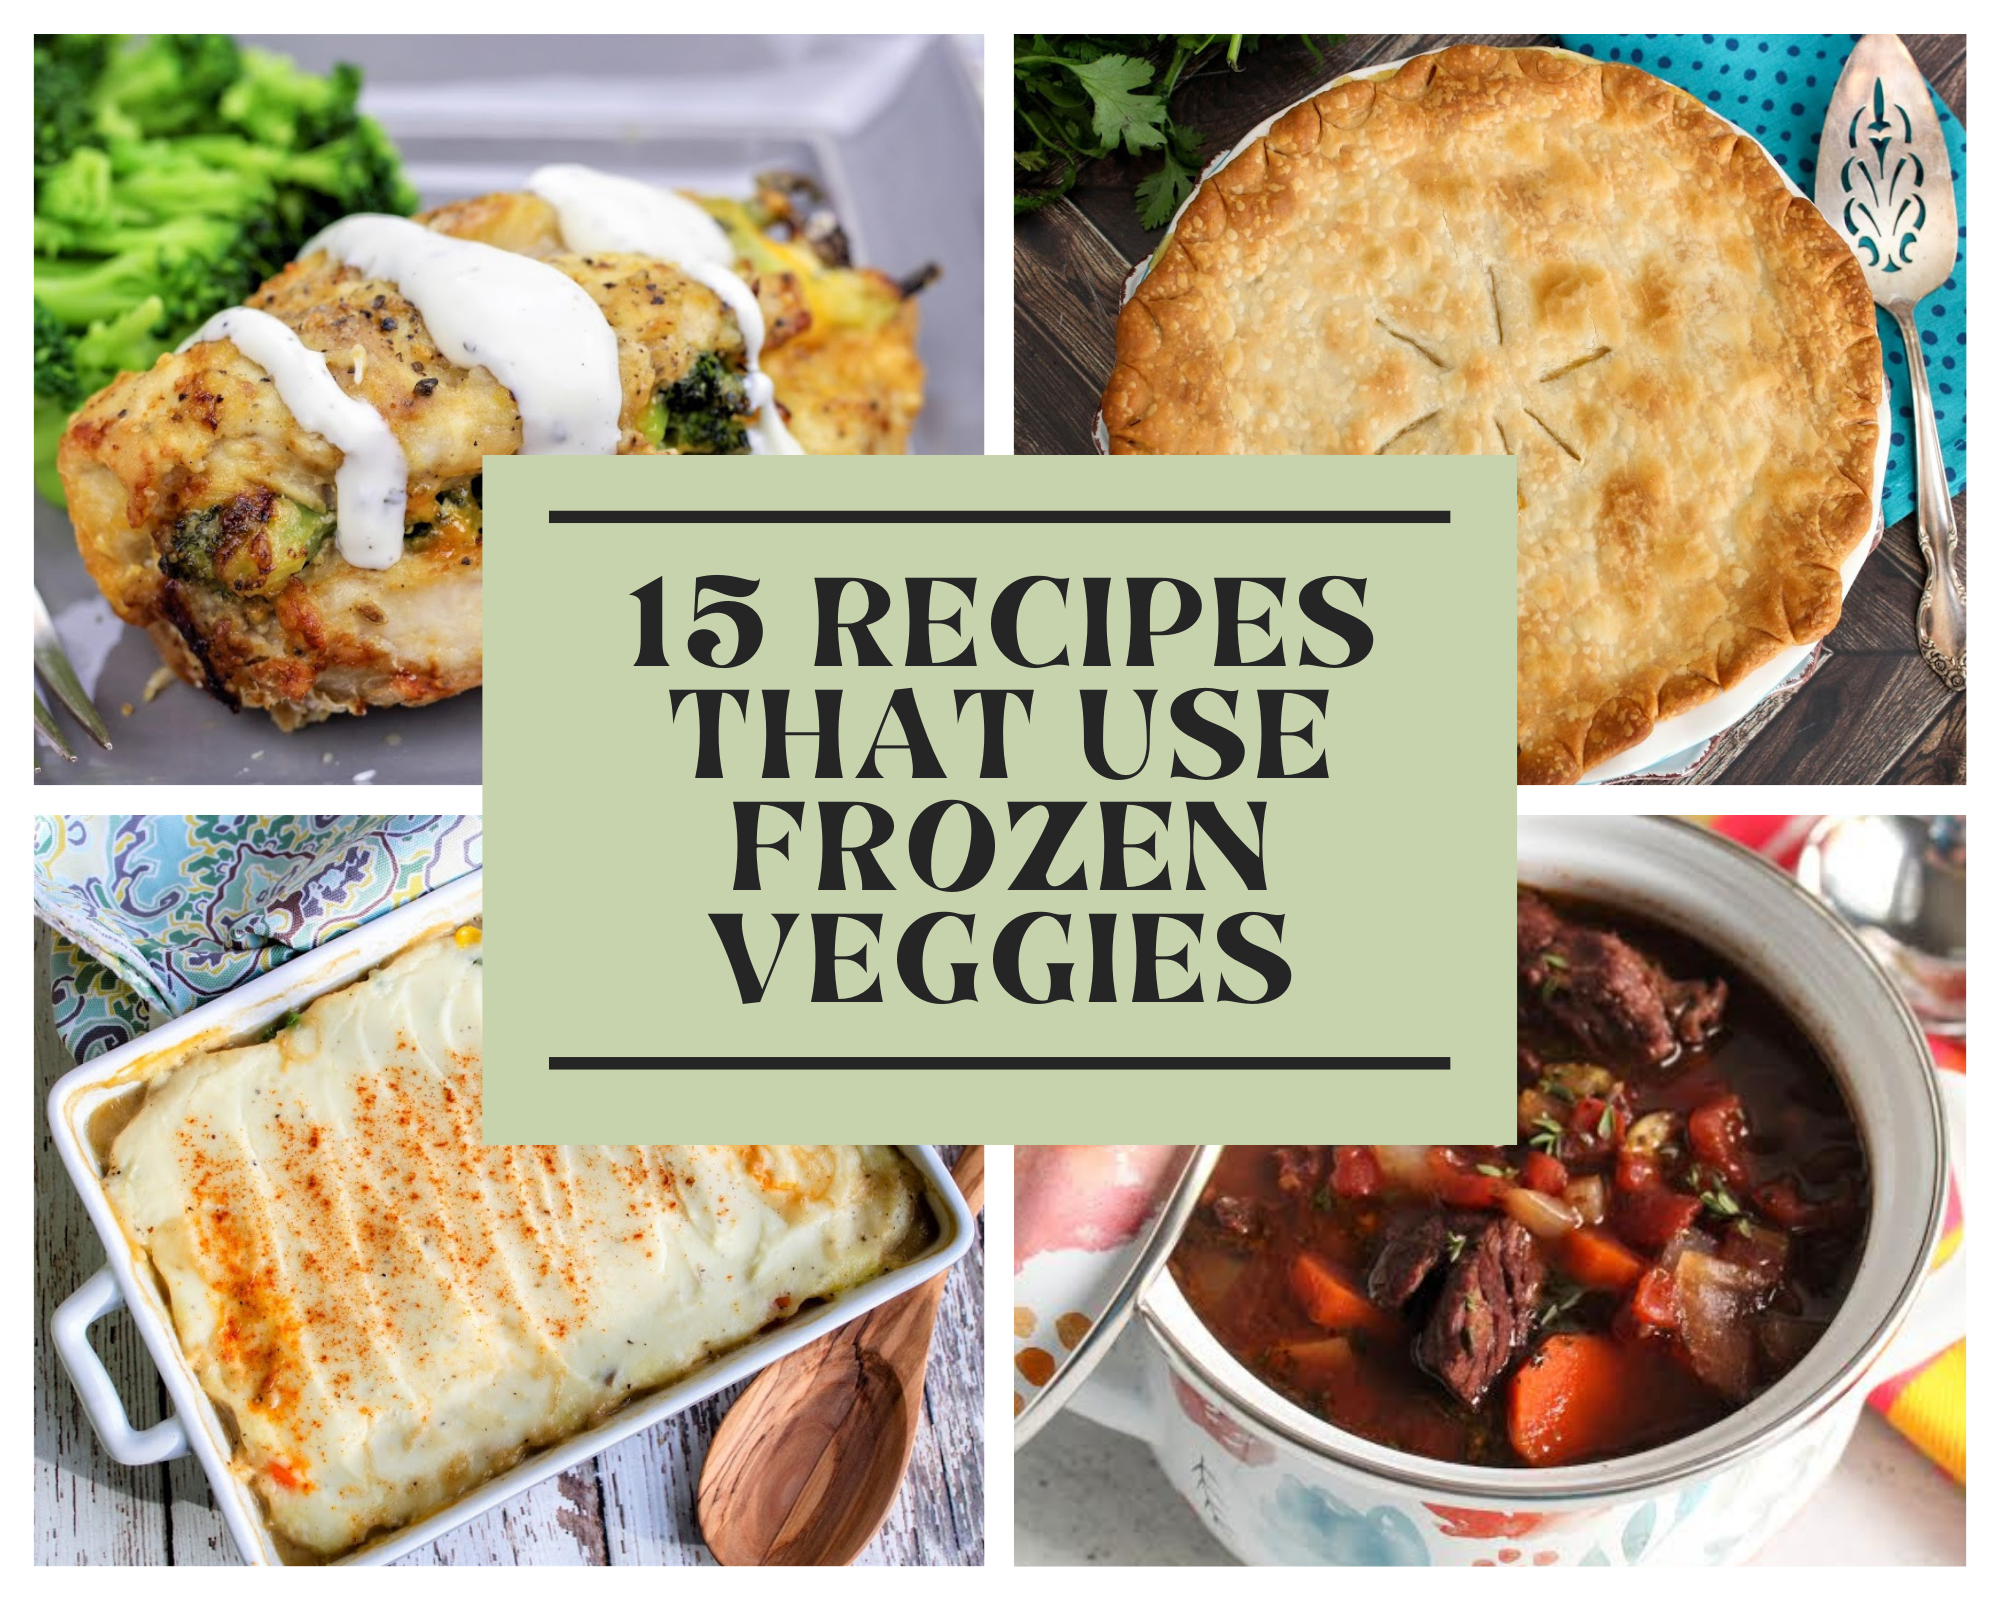 recipes with frozen veggies